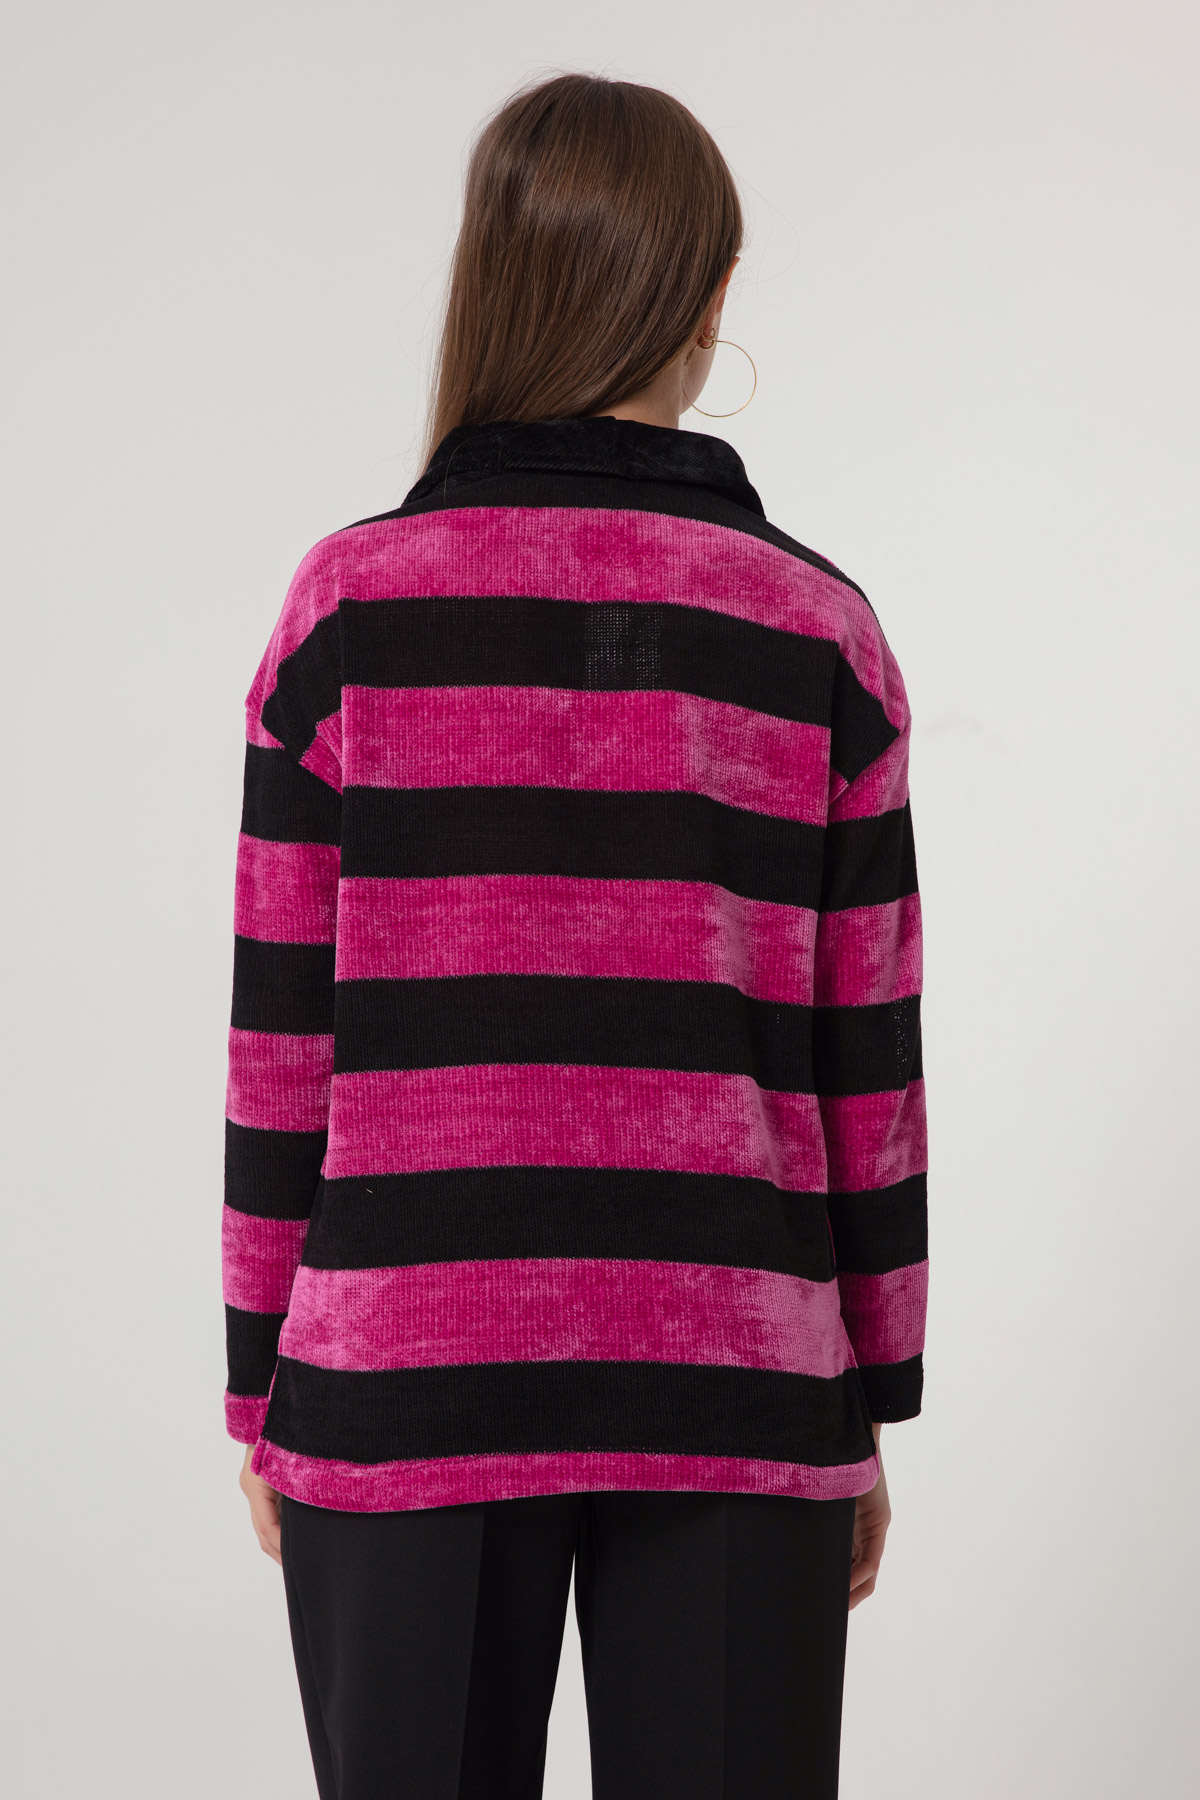 Women's Fuchsia Knitted Blouse